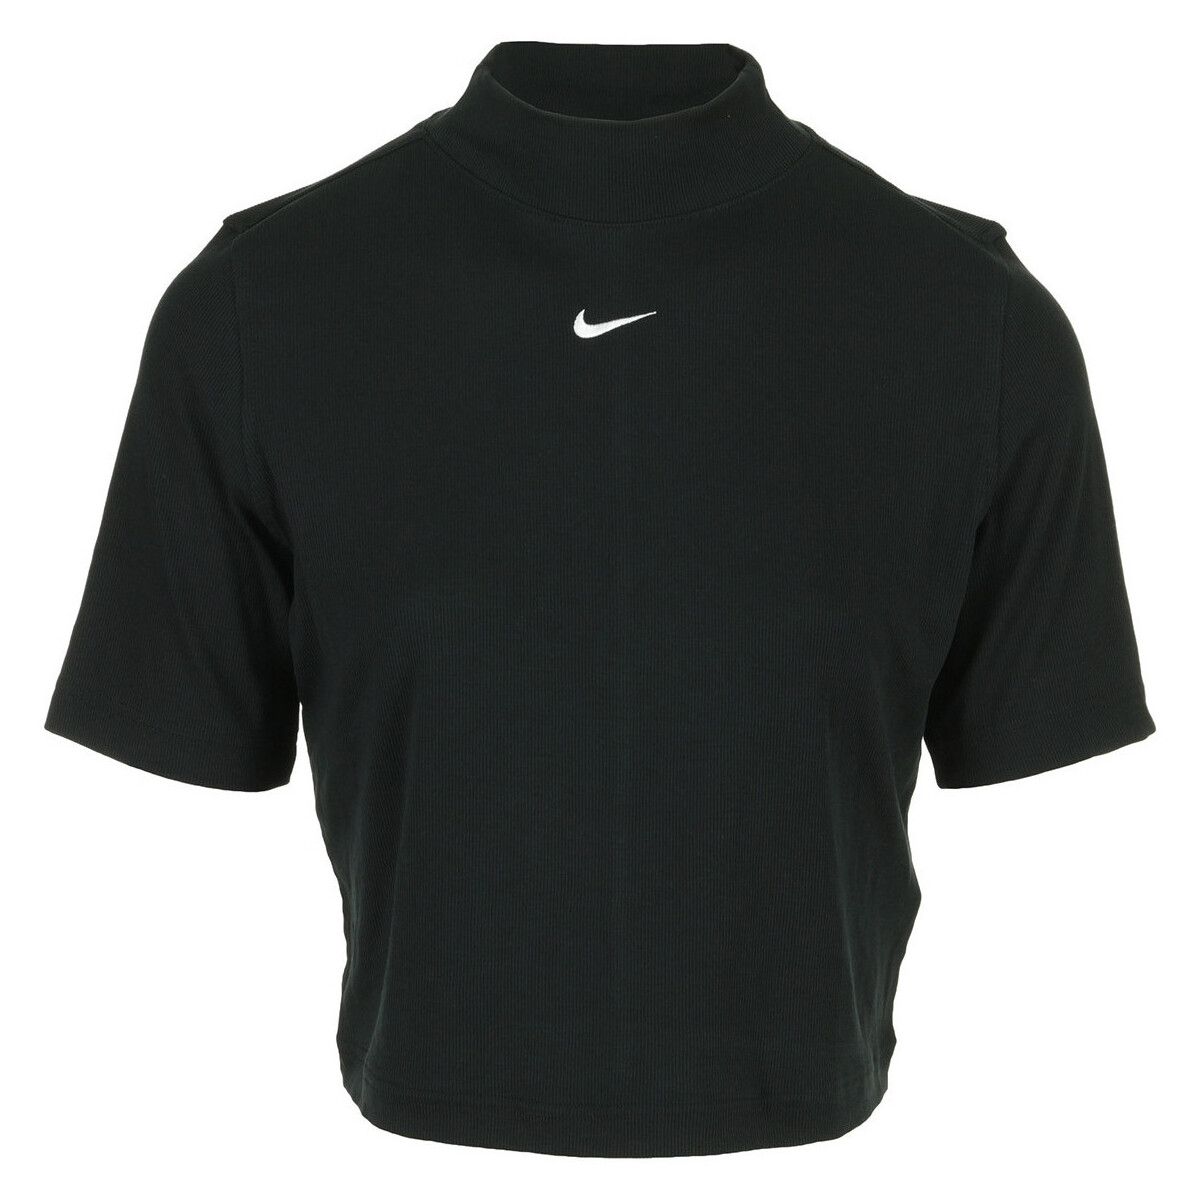 Vêtements Homme T-shirts manches courtes Nike Wms Nsw Essential Rip Mook Ss Top Noir